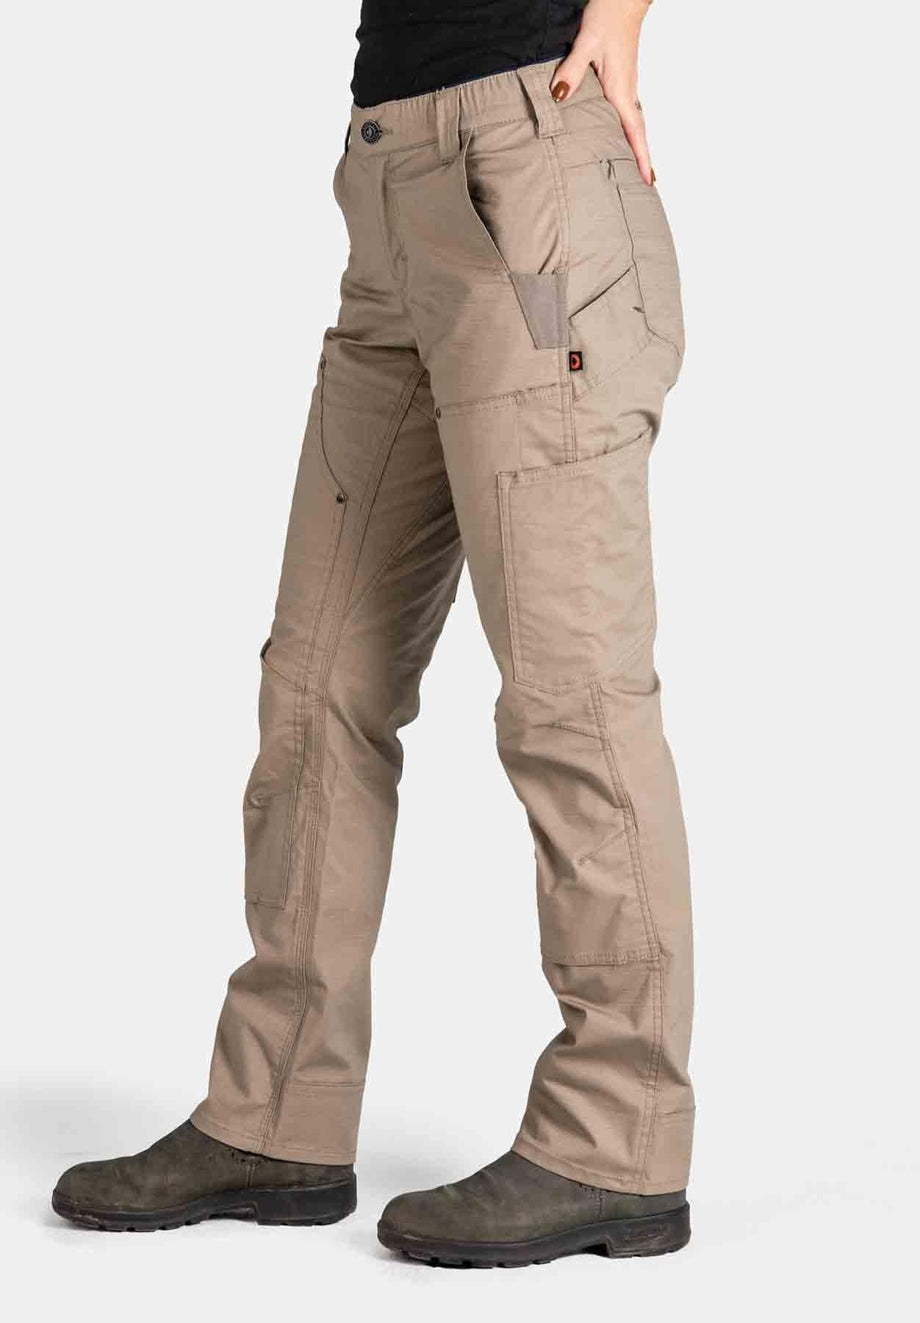 Dovetail WorkwearBritt X Ultralight Pants, 30 Inseam - Womens